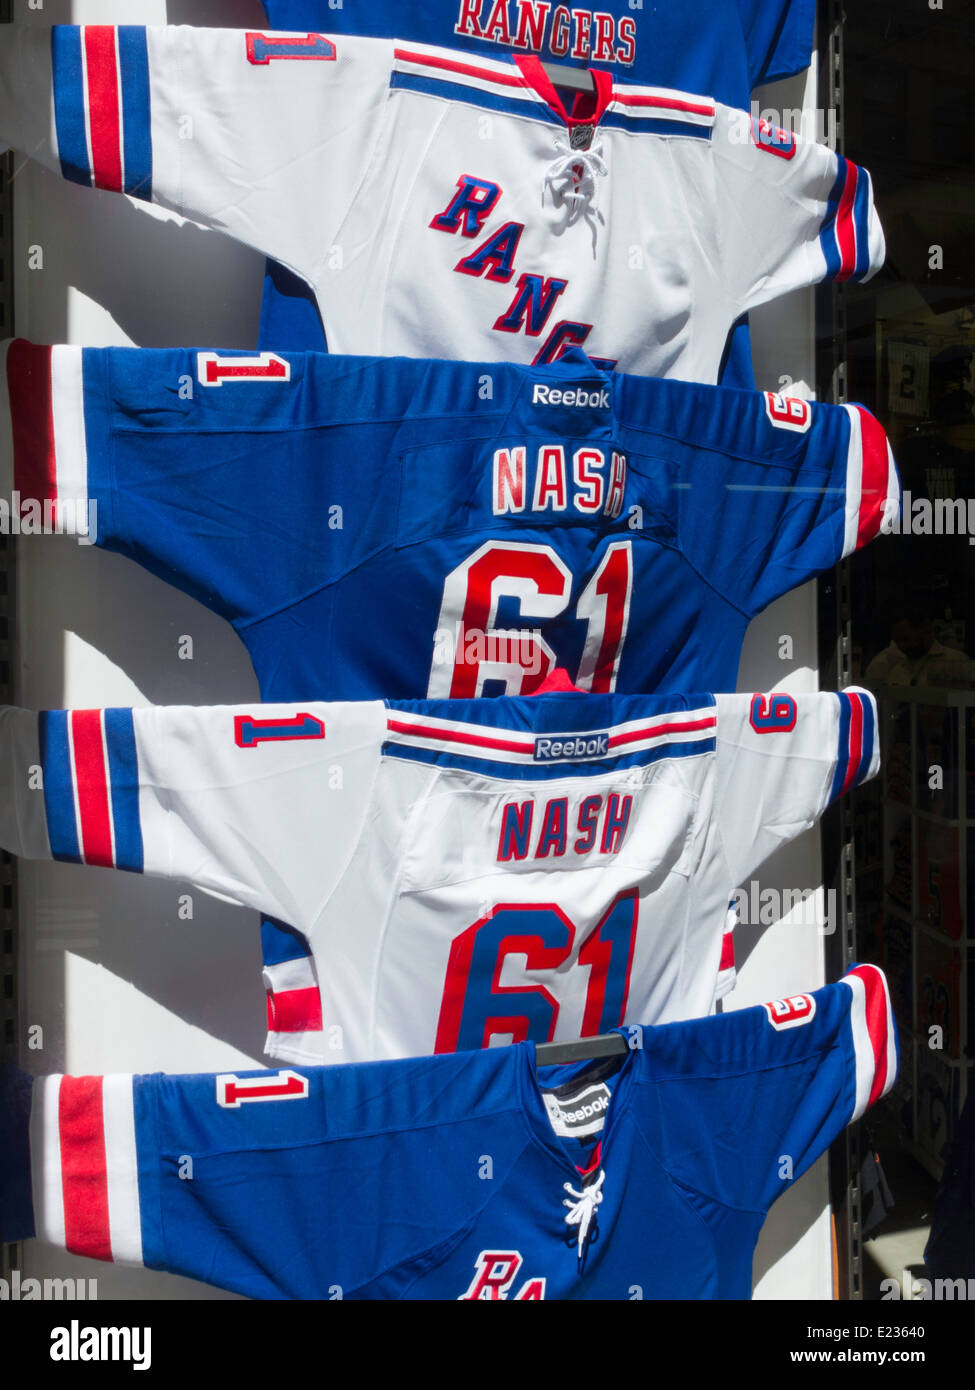 Rangers NHL Hockey Team Jerseys, Store Display, NYC, USA Stock Photo